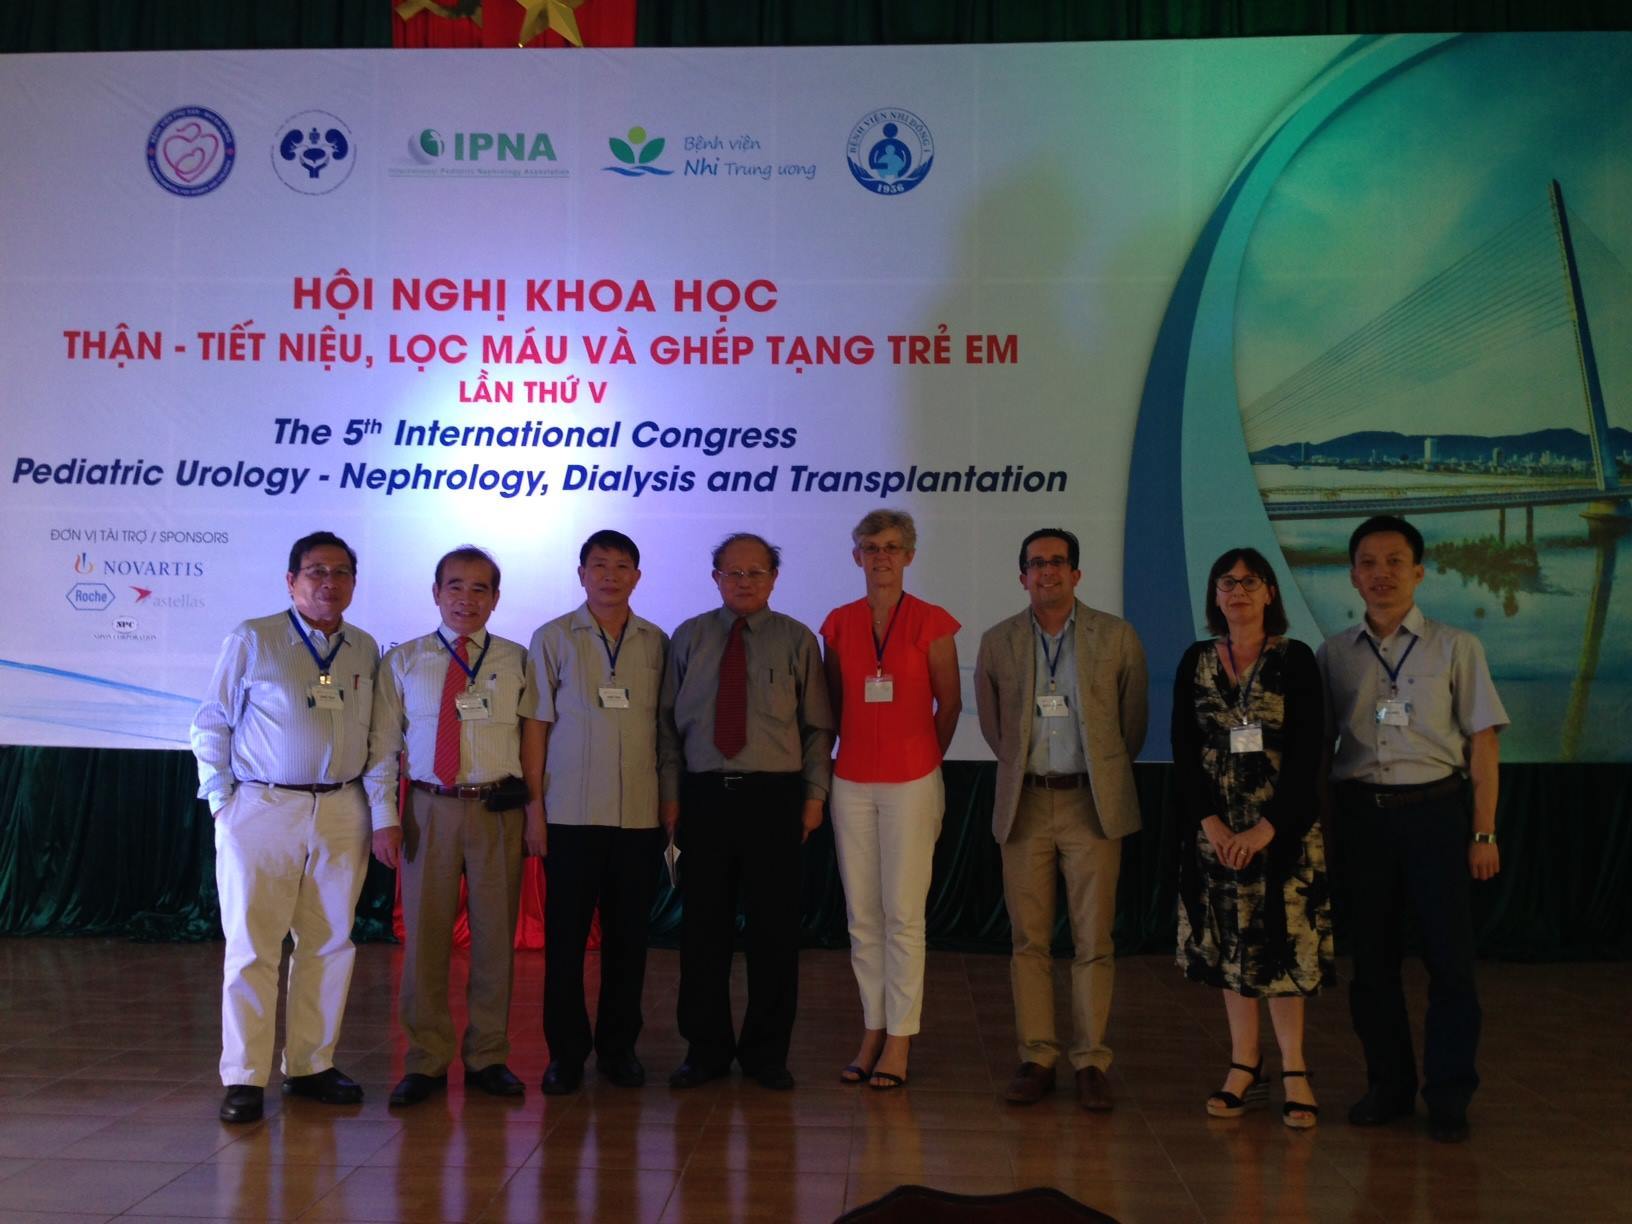 The 5th International Congress of Pediatric Urology - Nephrology, Dialysis, and Transplantation